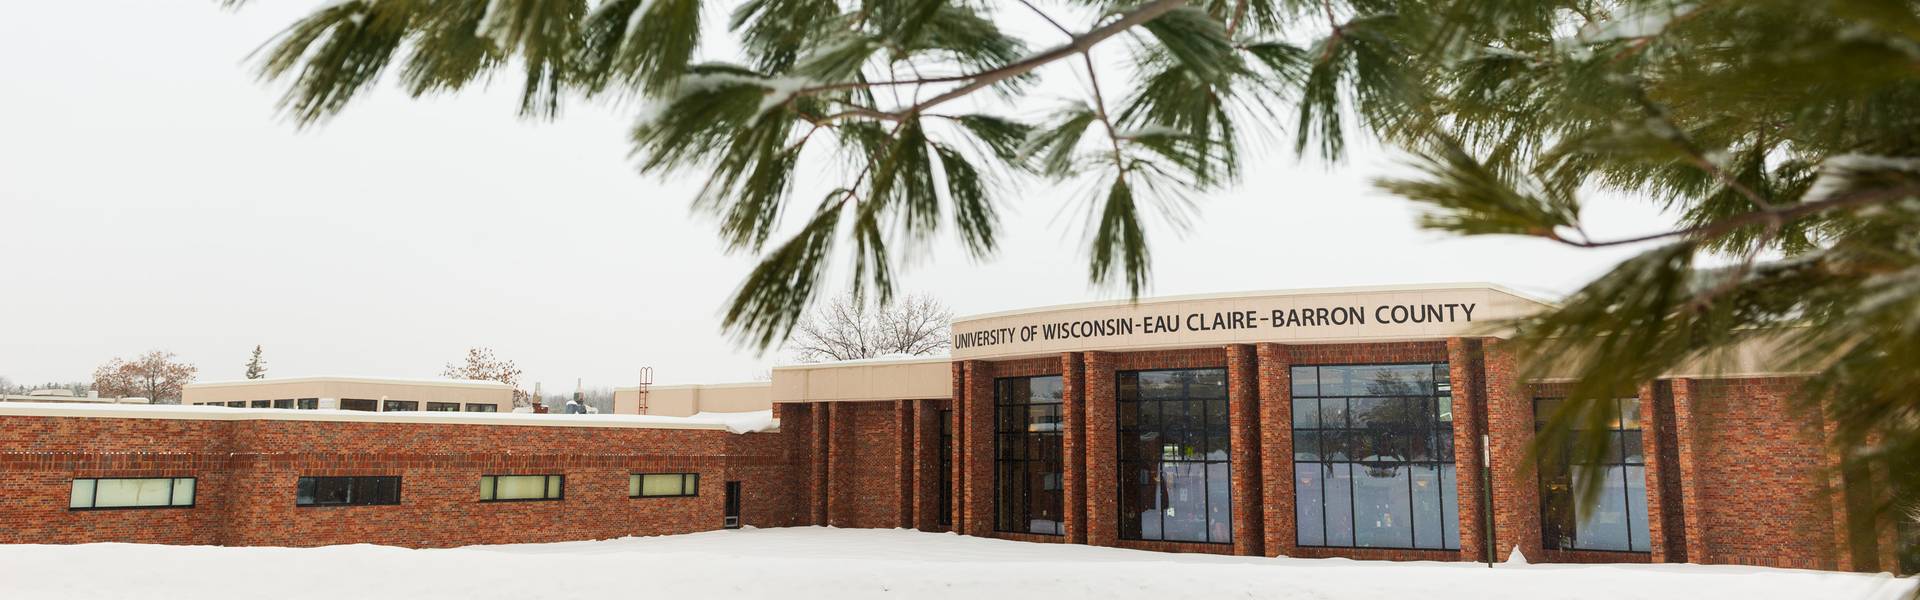 UW-Eau Claire – Barron County in winter